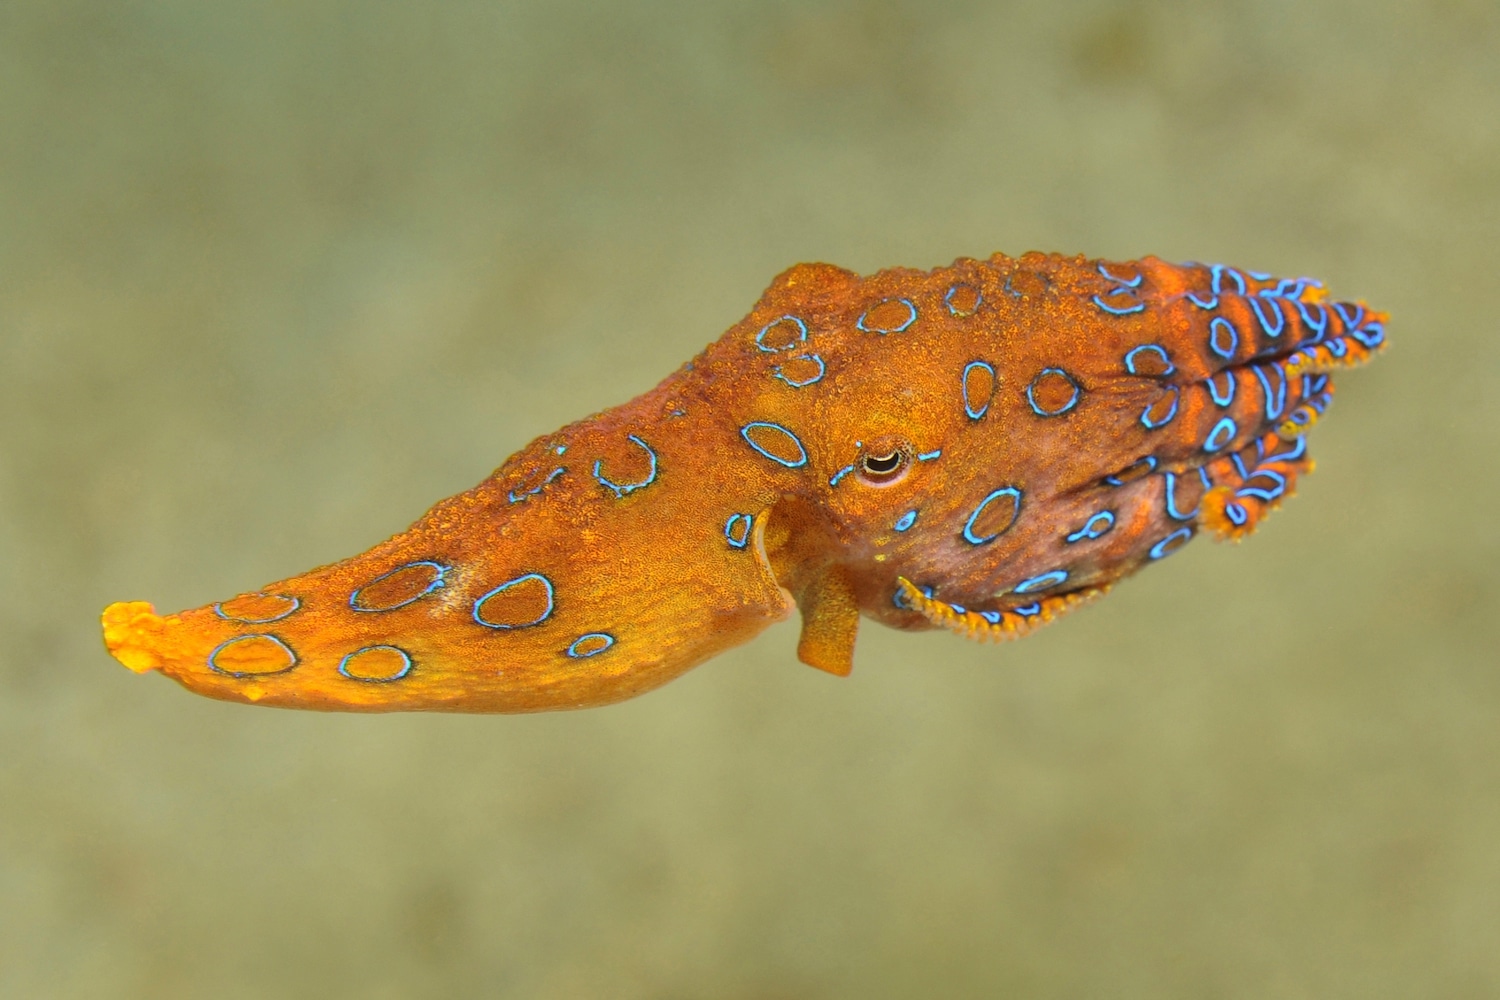 Blue ringed Octopus by sunster poller on Prezi